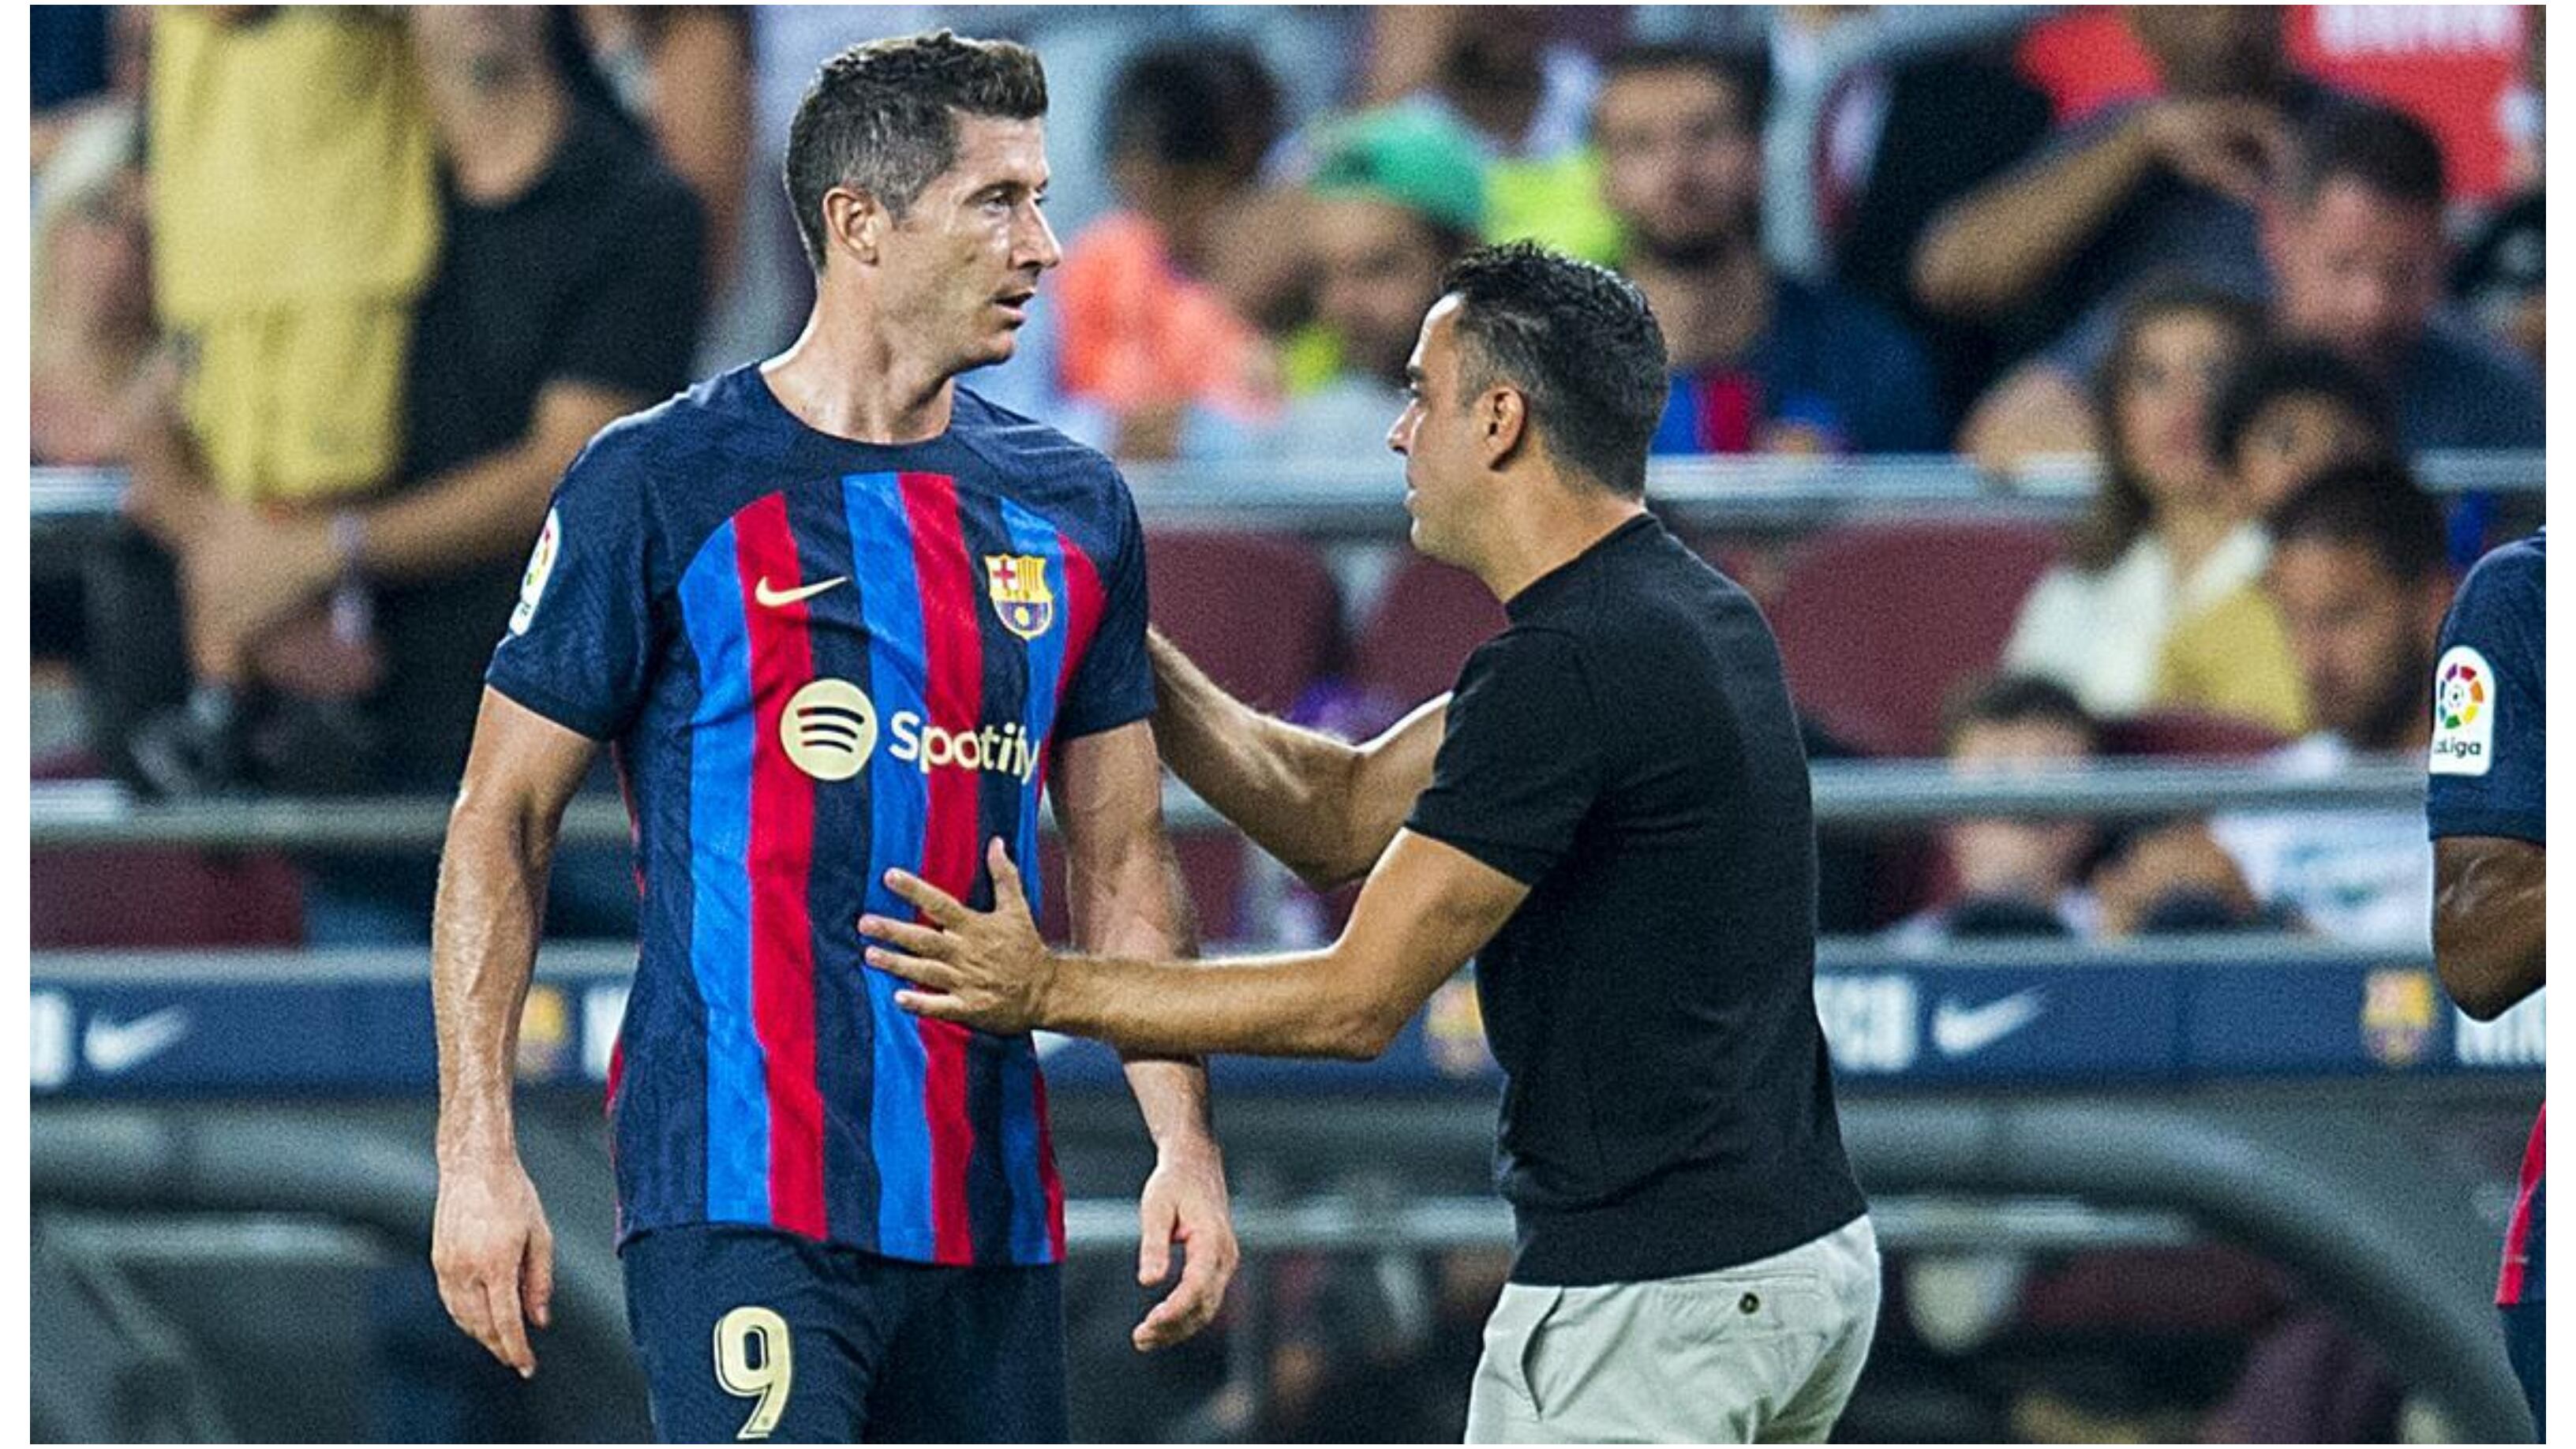 While Barcelona tires of Lewandowski's failures, the striker that Xavi dreams of